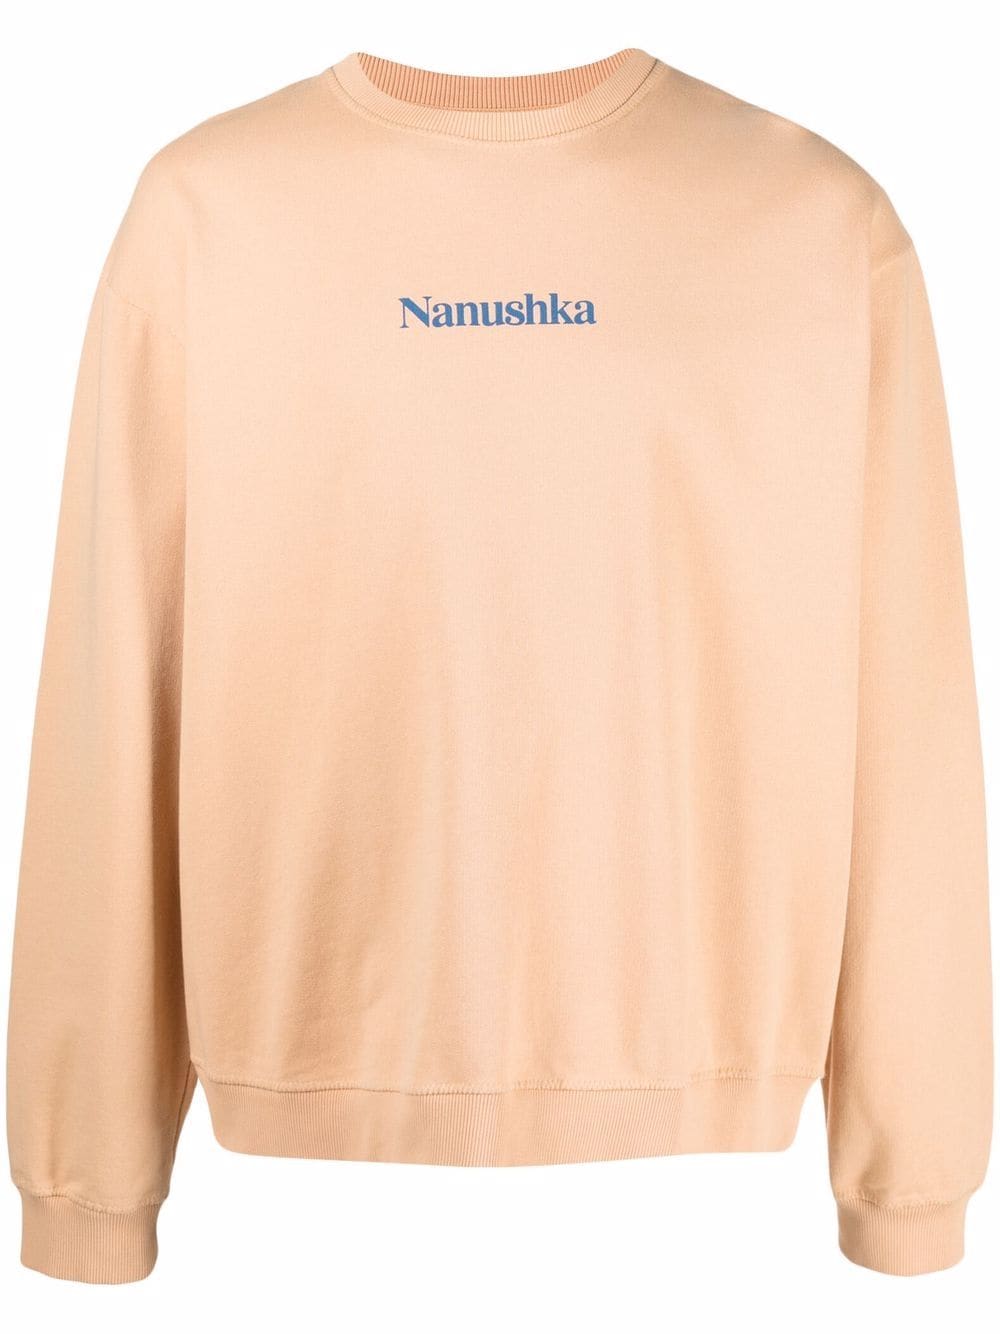 Nanushka - logo-print sweatshirt - men - Fabric - XS - Orange